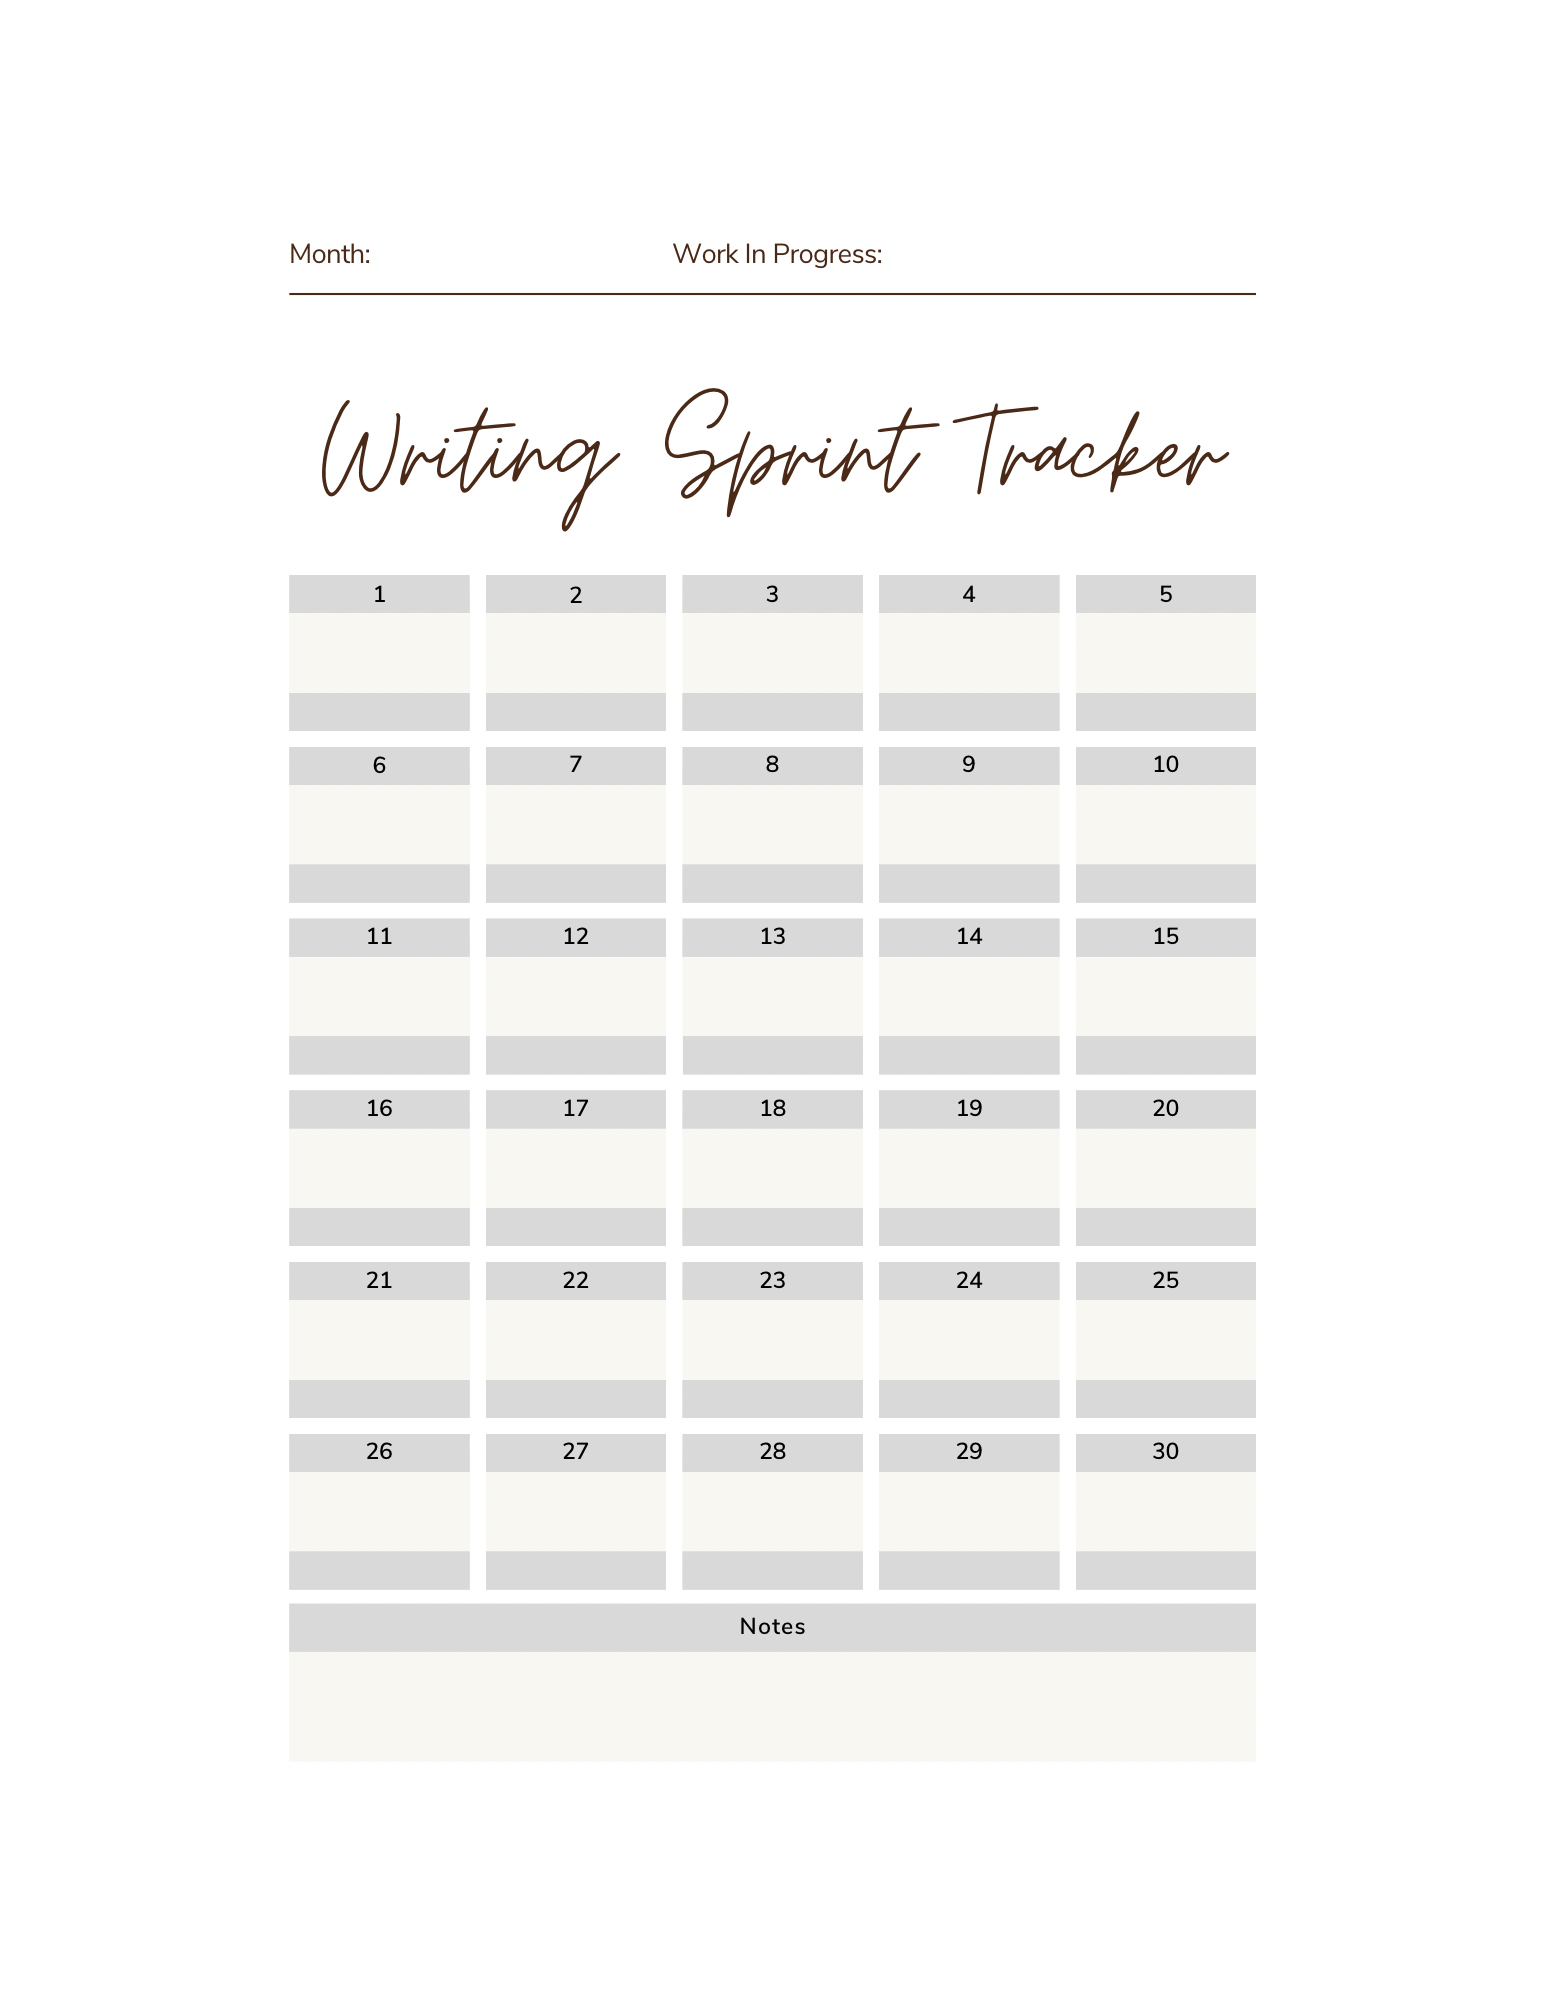 Writing Sprint Tracker